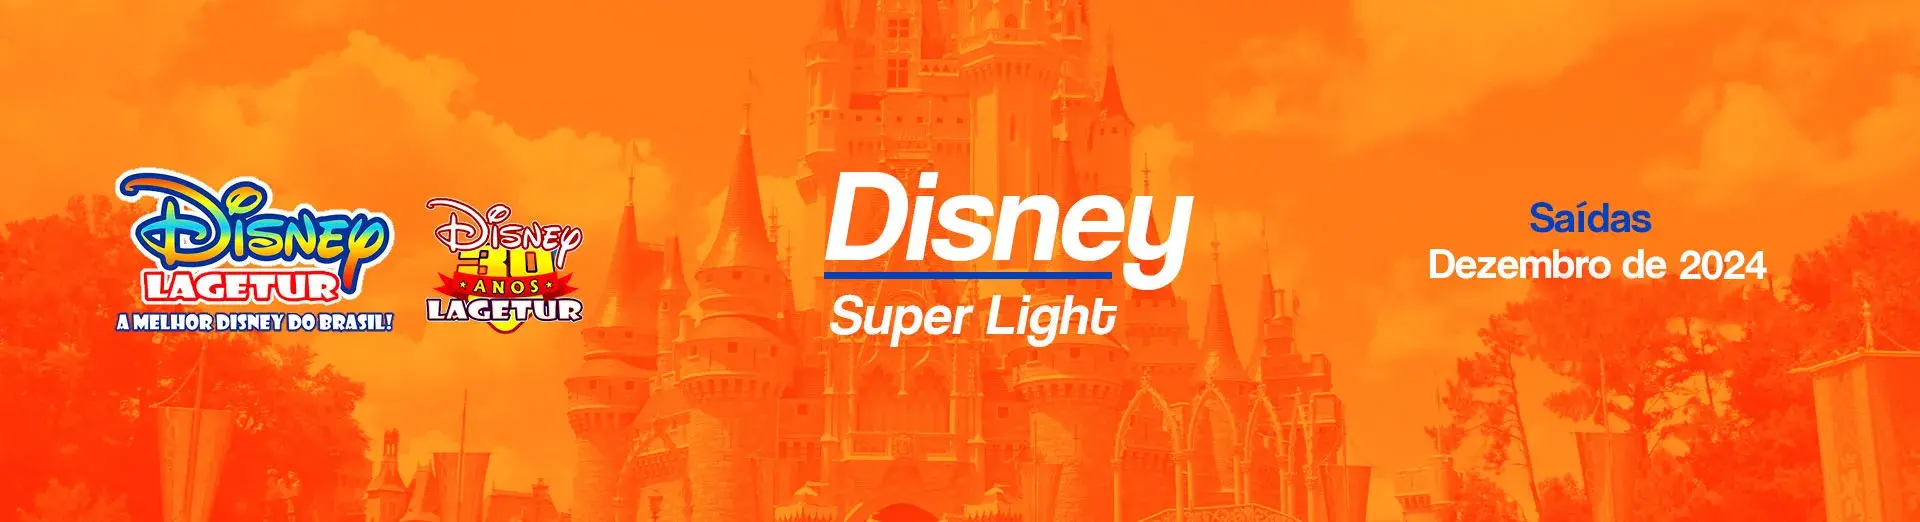 Disney Super Light  Dezembro 2024